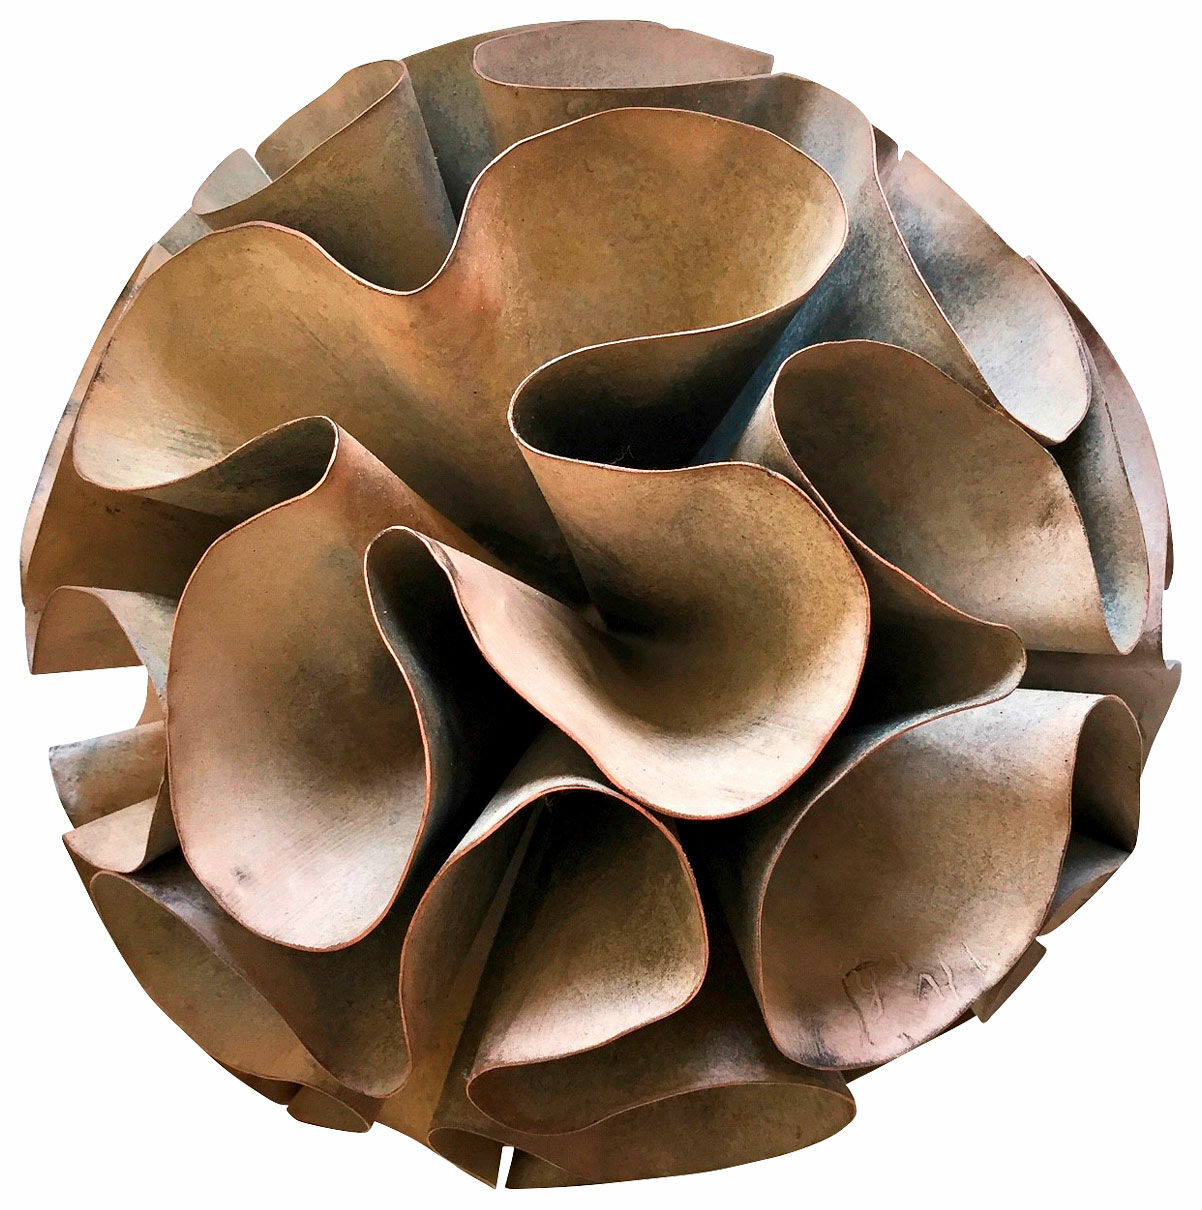 Sculpture "Seed - Mother of Pearl" (2019) (Original / Unique Piece), pigmented copper by Garda Alexander